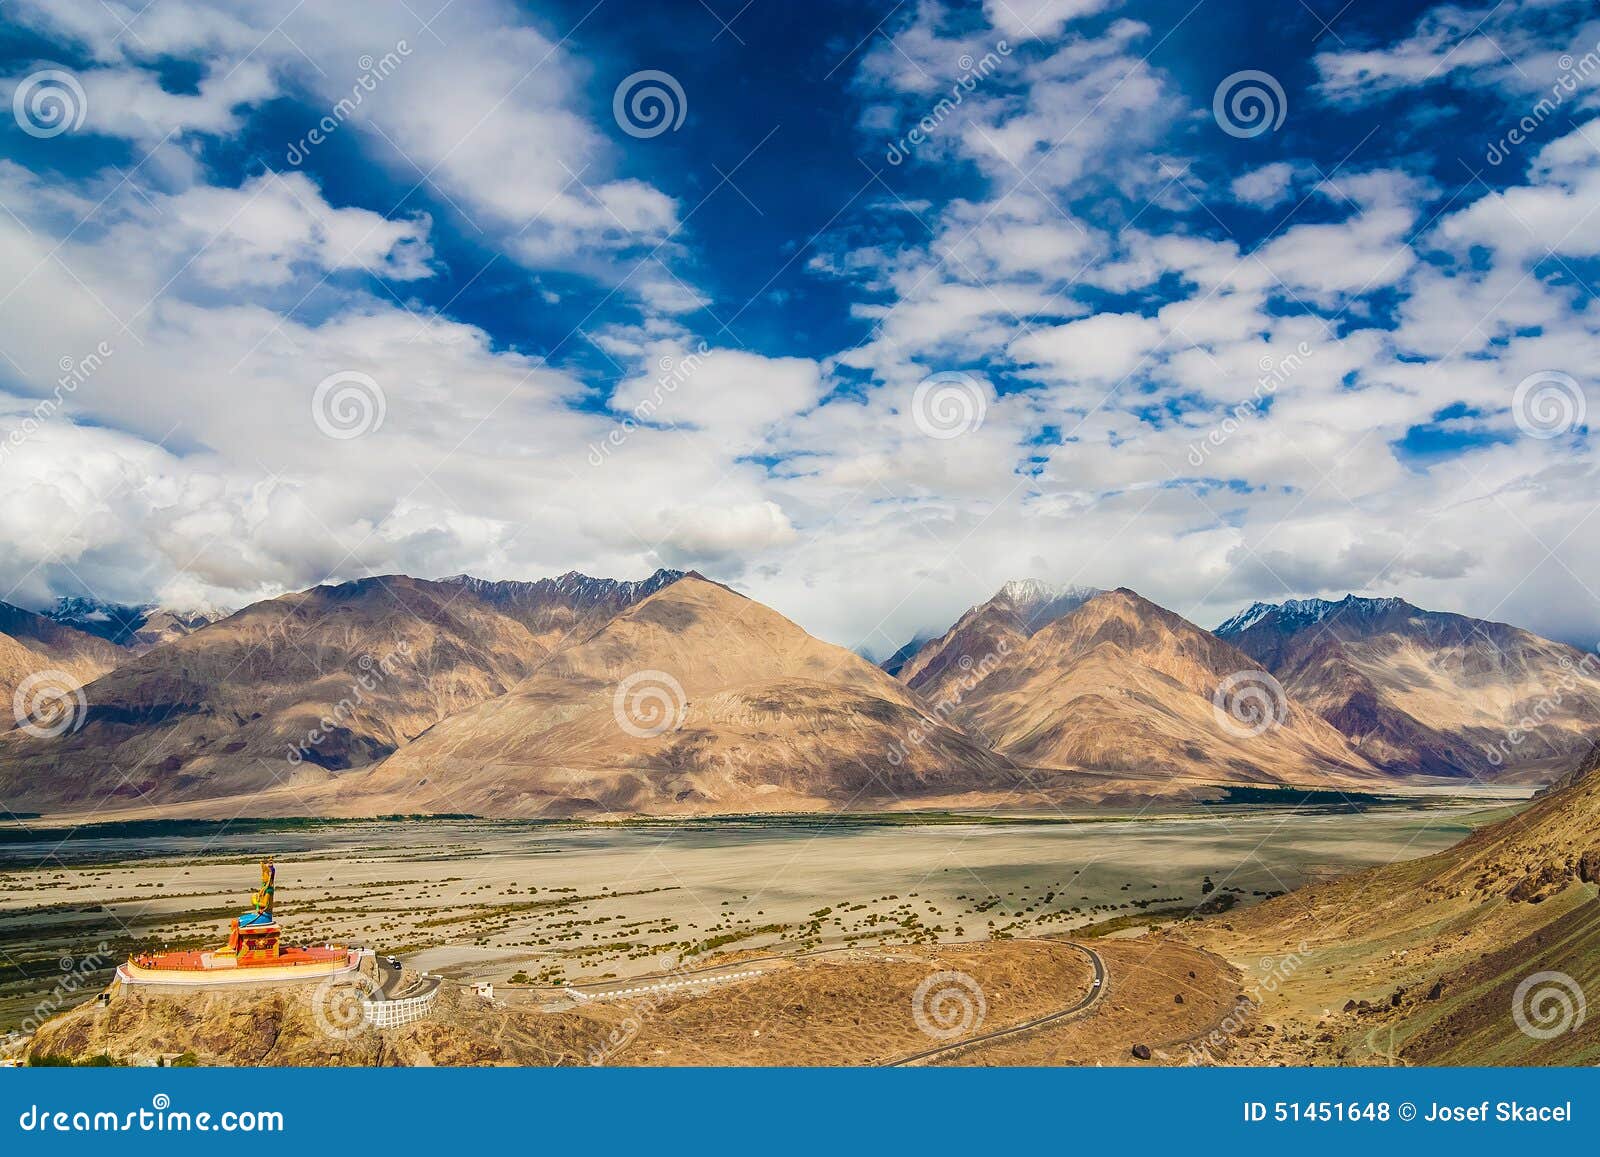 nubra valley, ladakh, himalyas, india